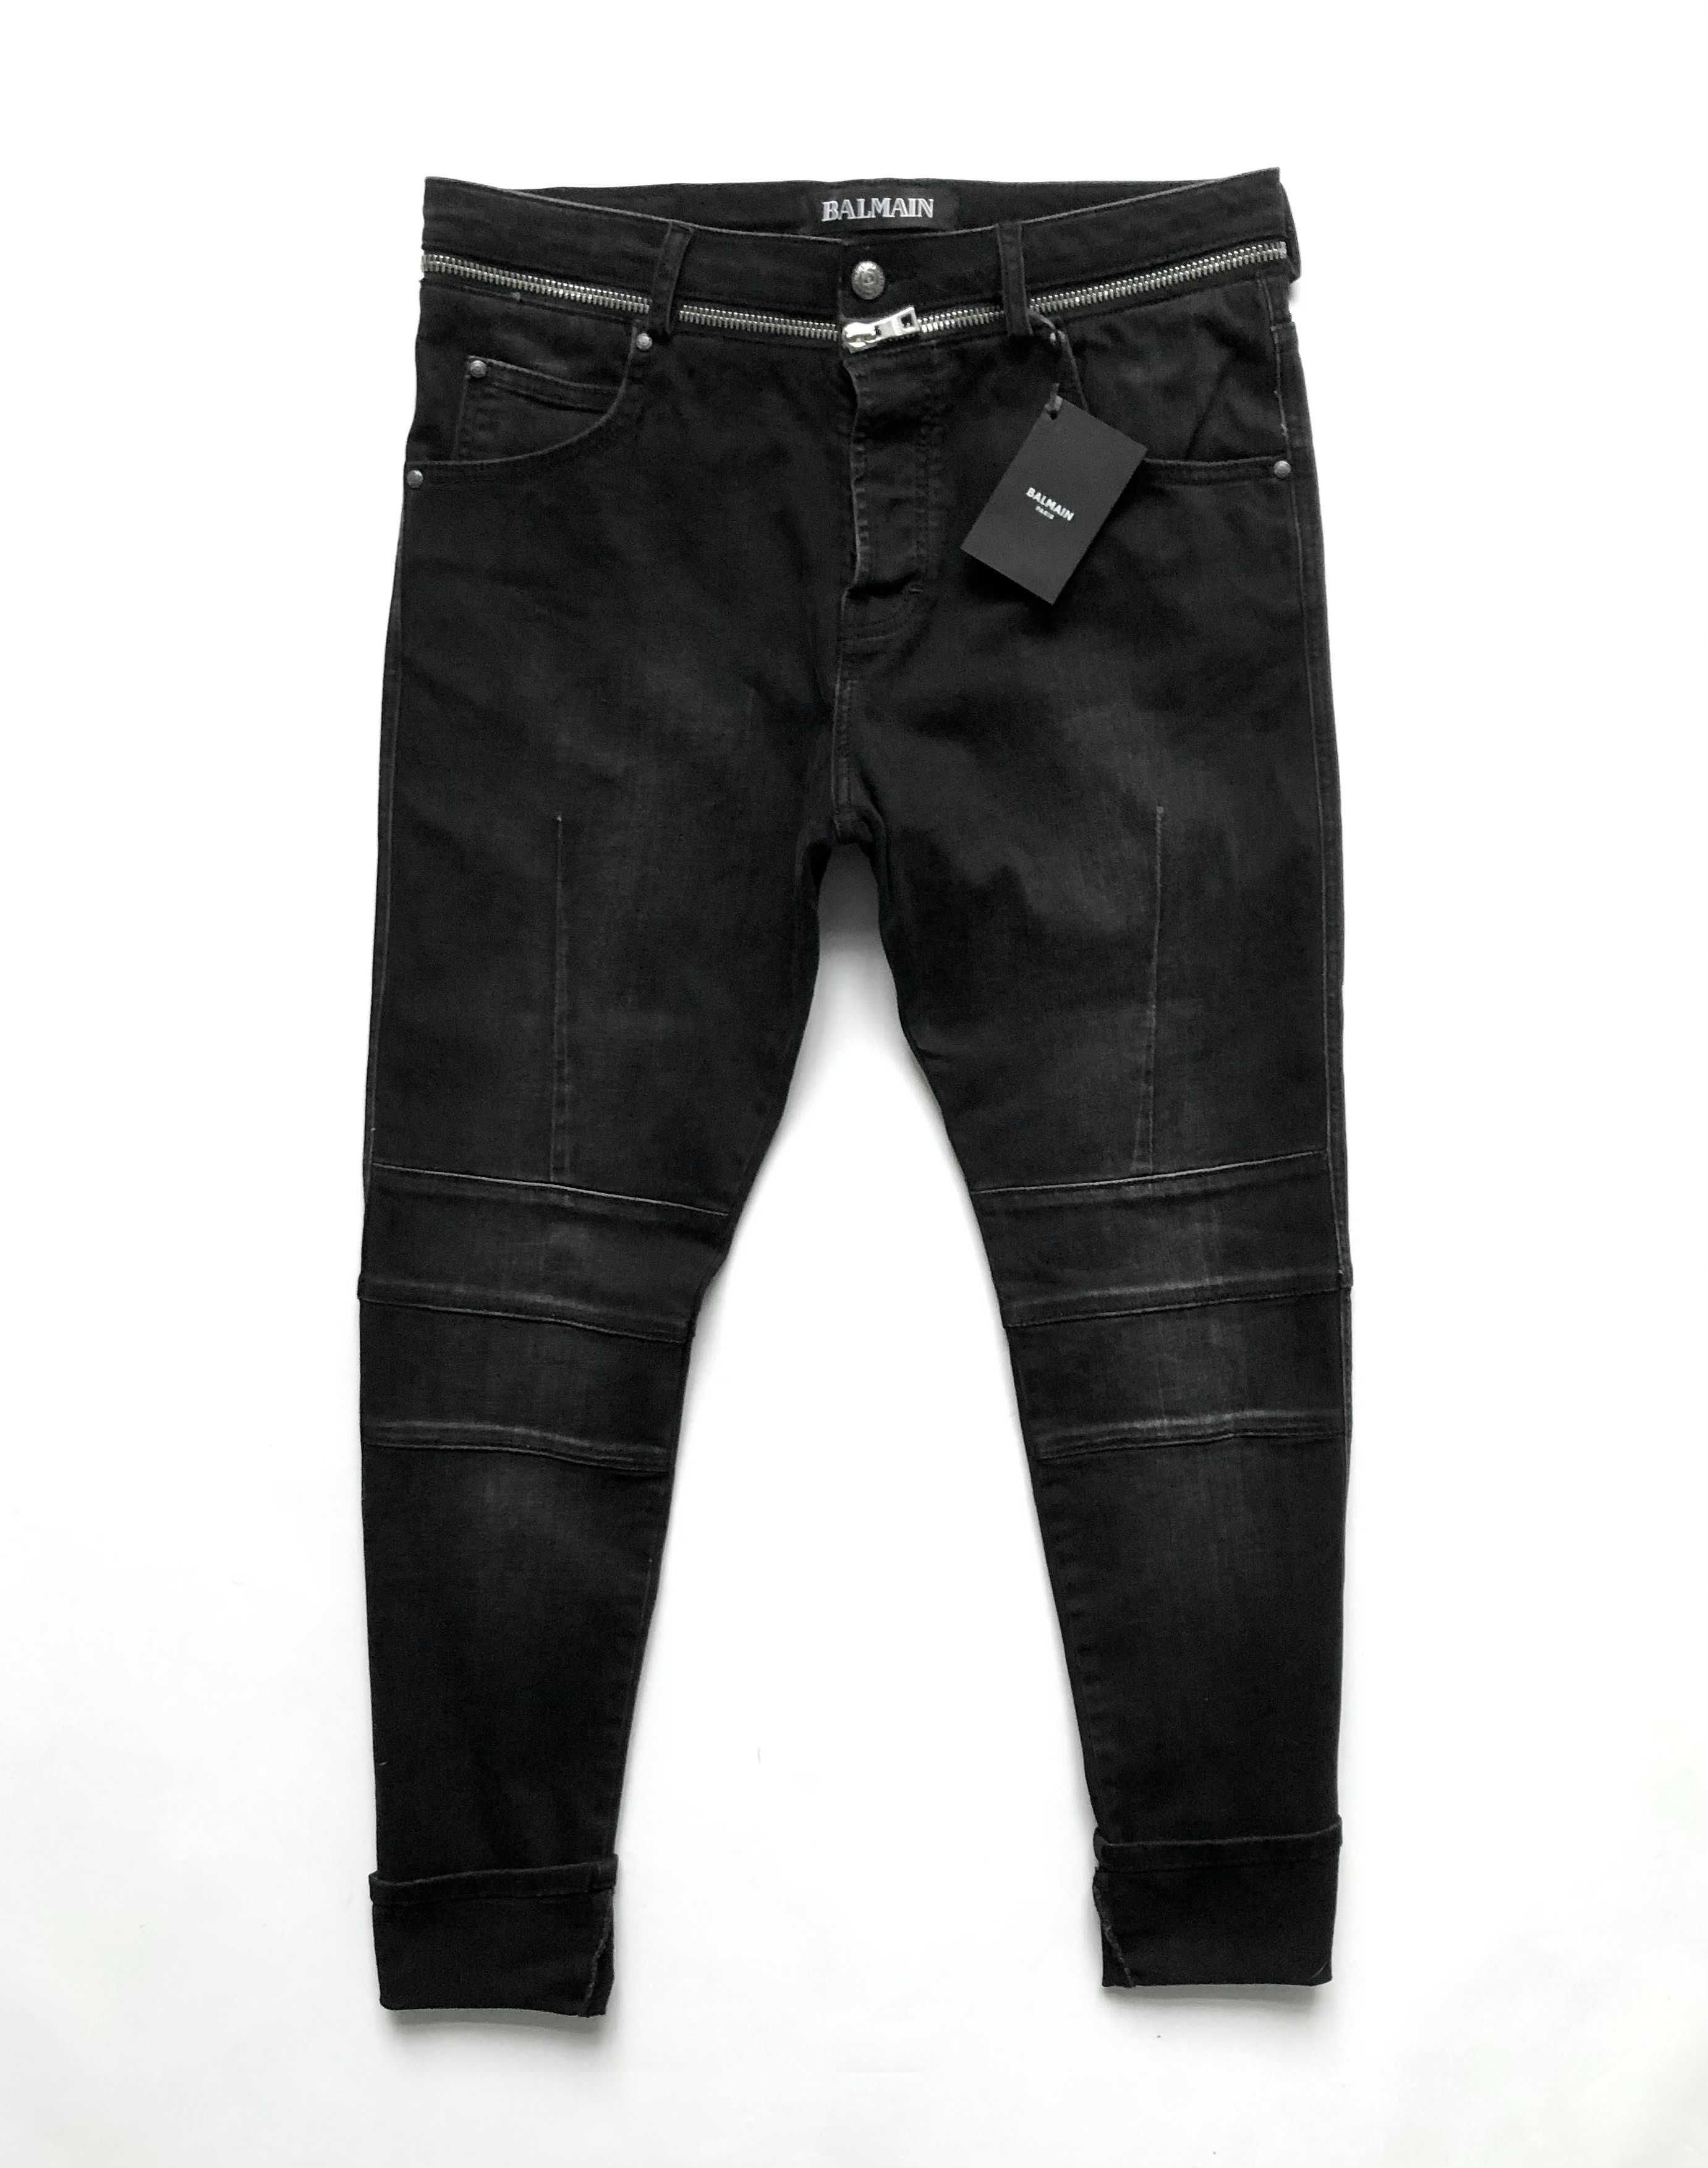 Balmain spodnie jeans różne rozmiary 31, 32, 33, 34, 36